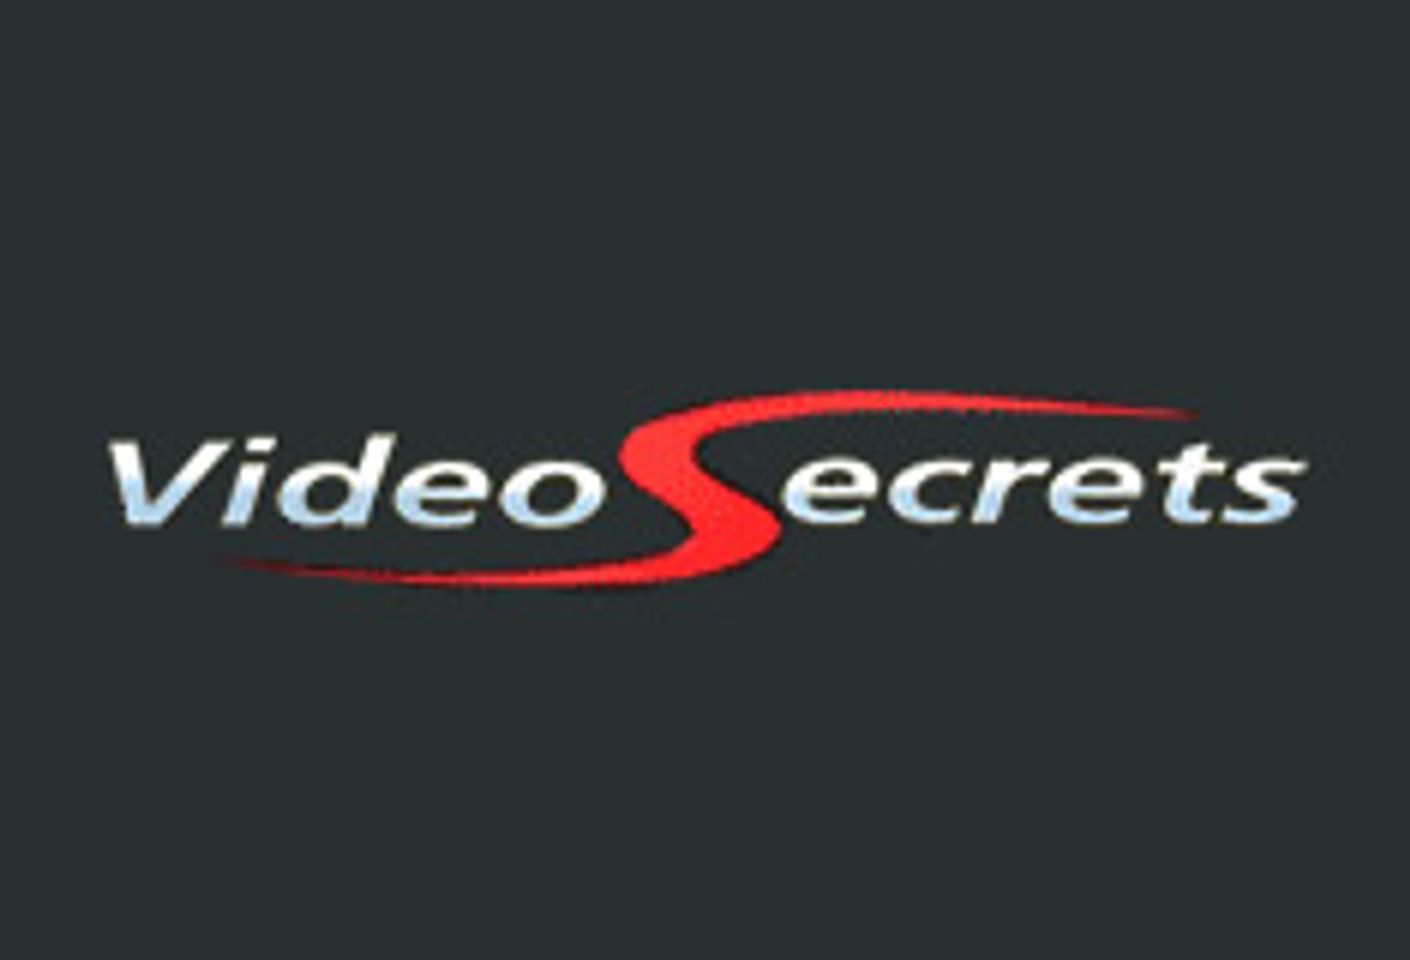 Video Secrets Donates $5,000 to Katrina Relief Effort